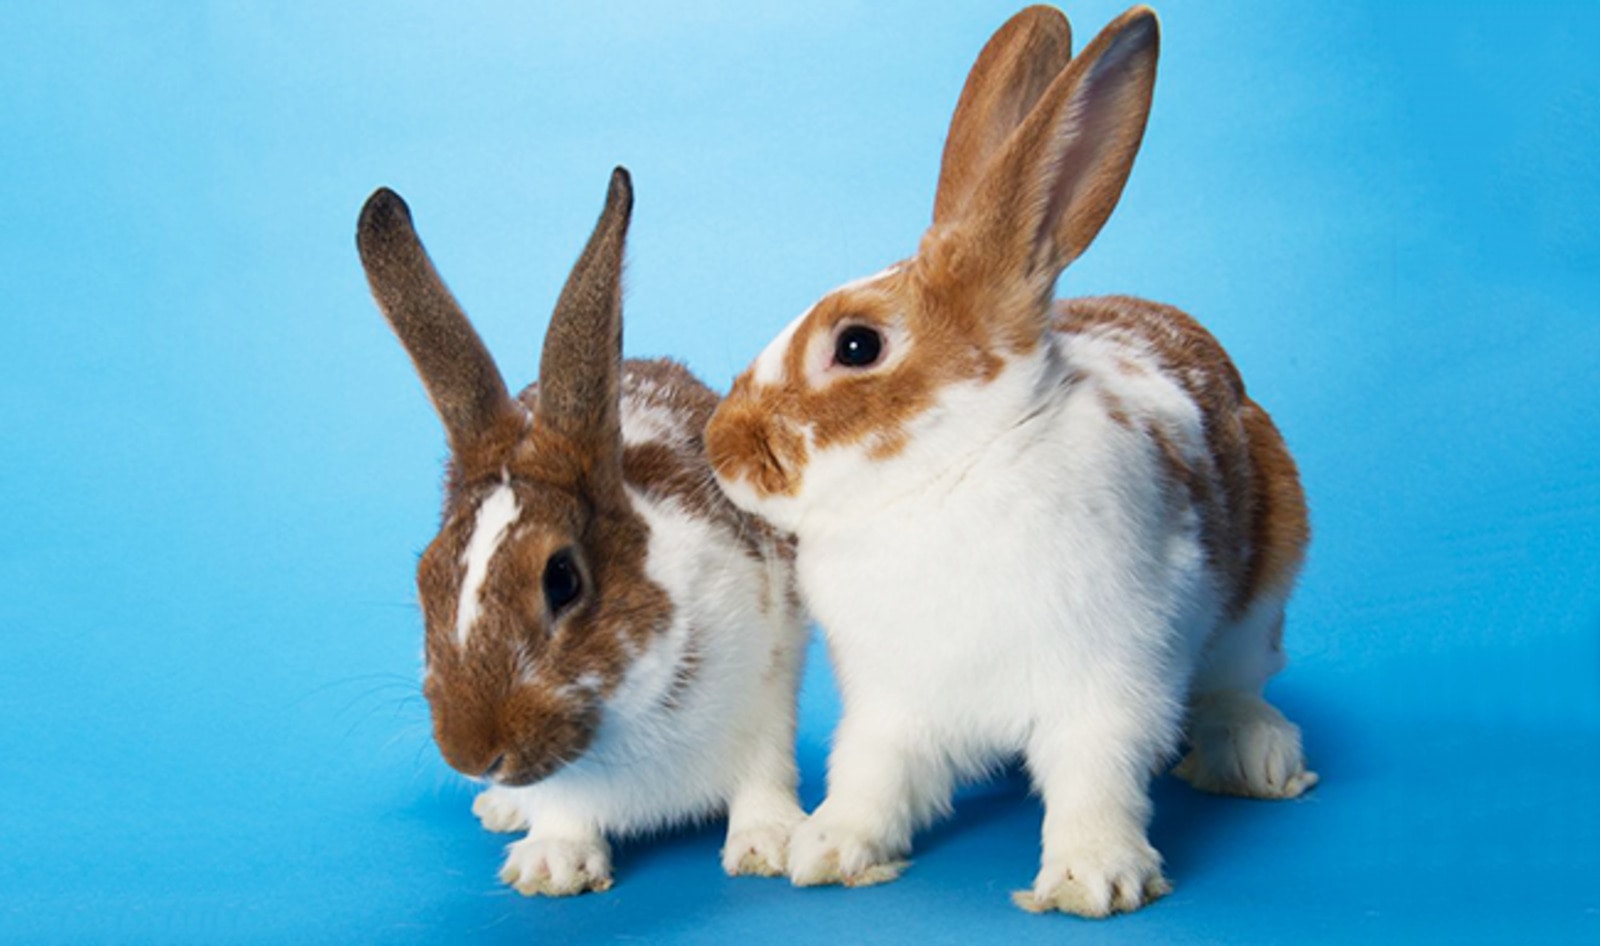 Nevada Bans Cosmetic Animal Testing